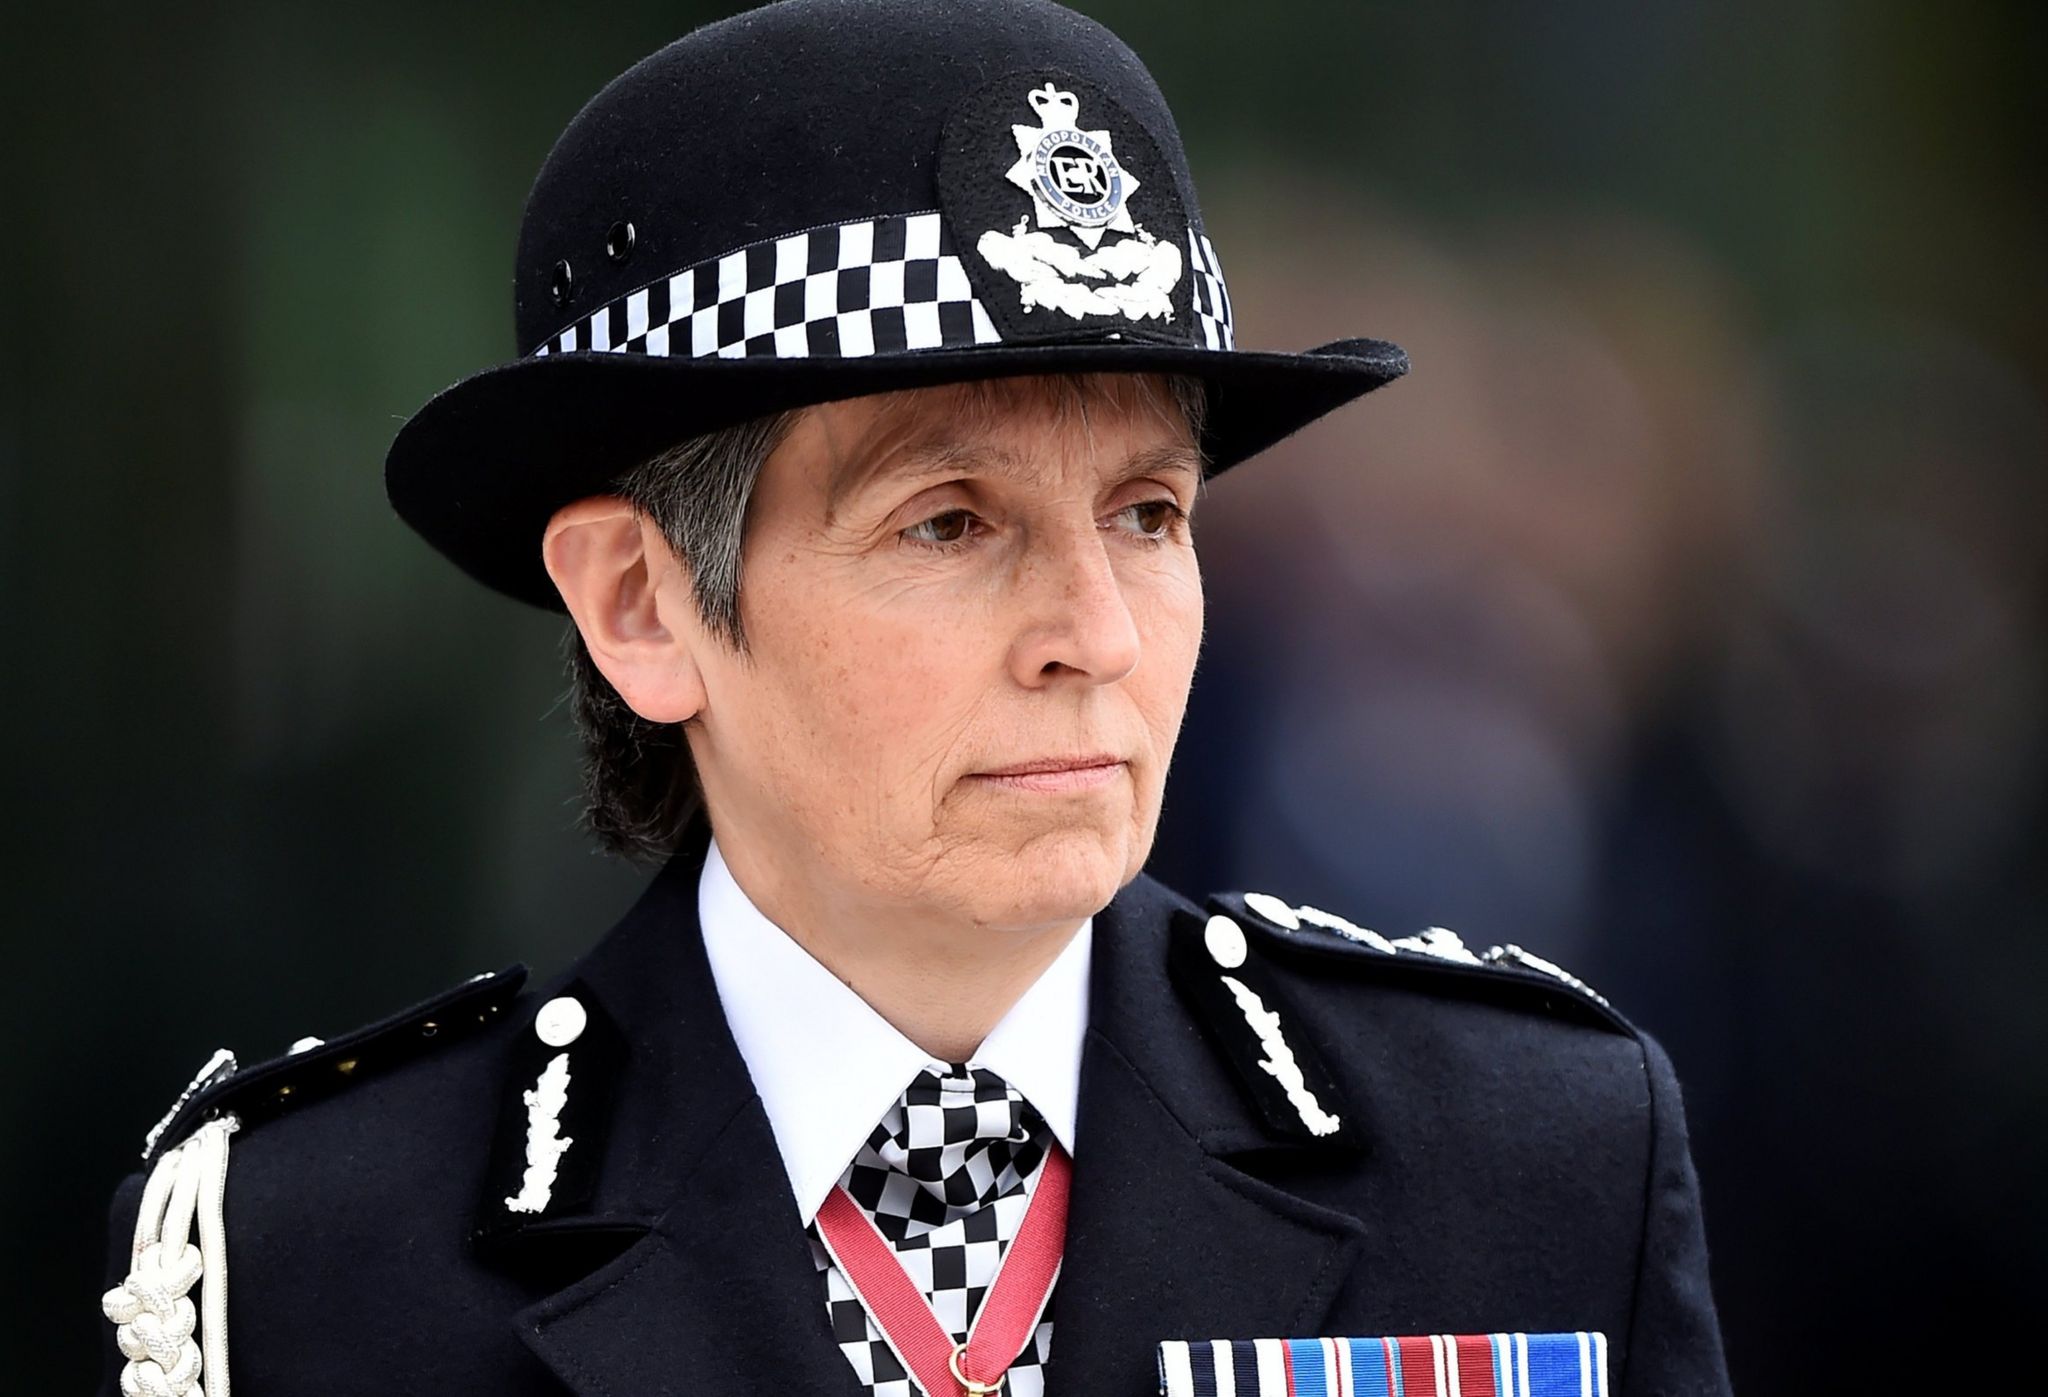 Cressida Dick, the Metropolitan Police Commissioner